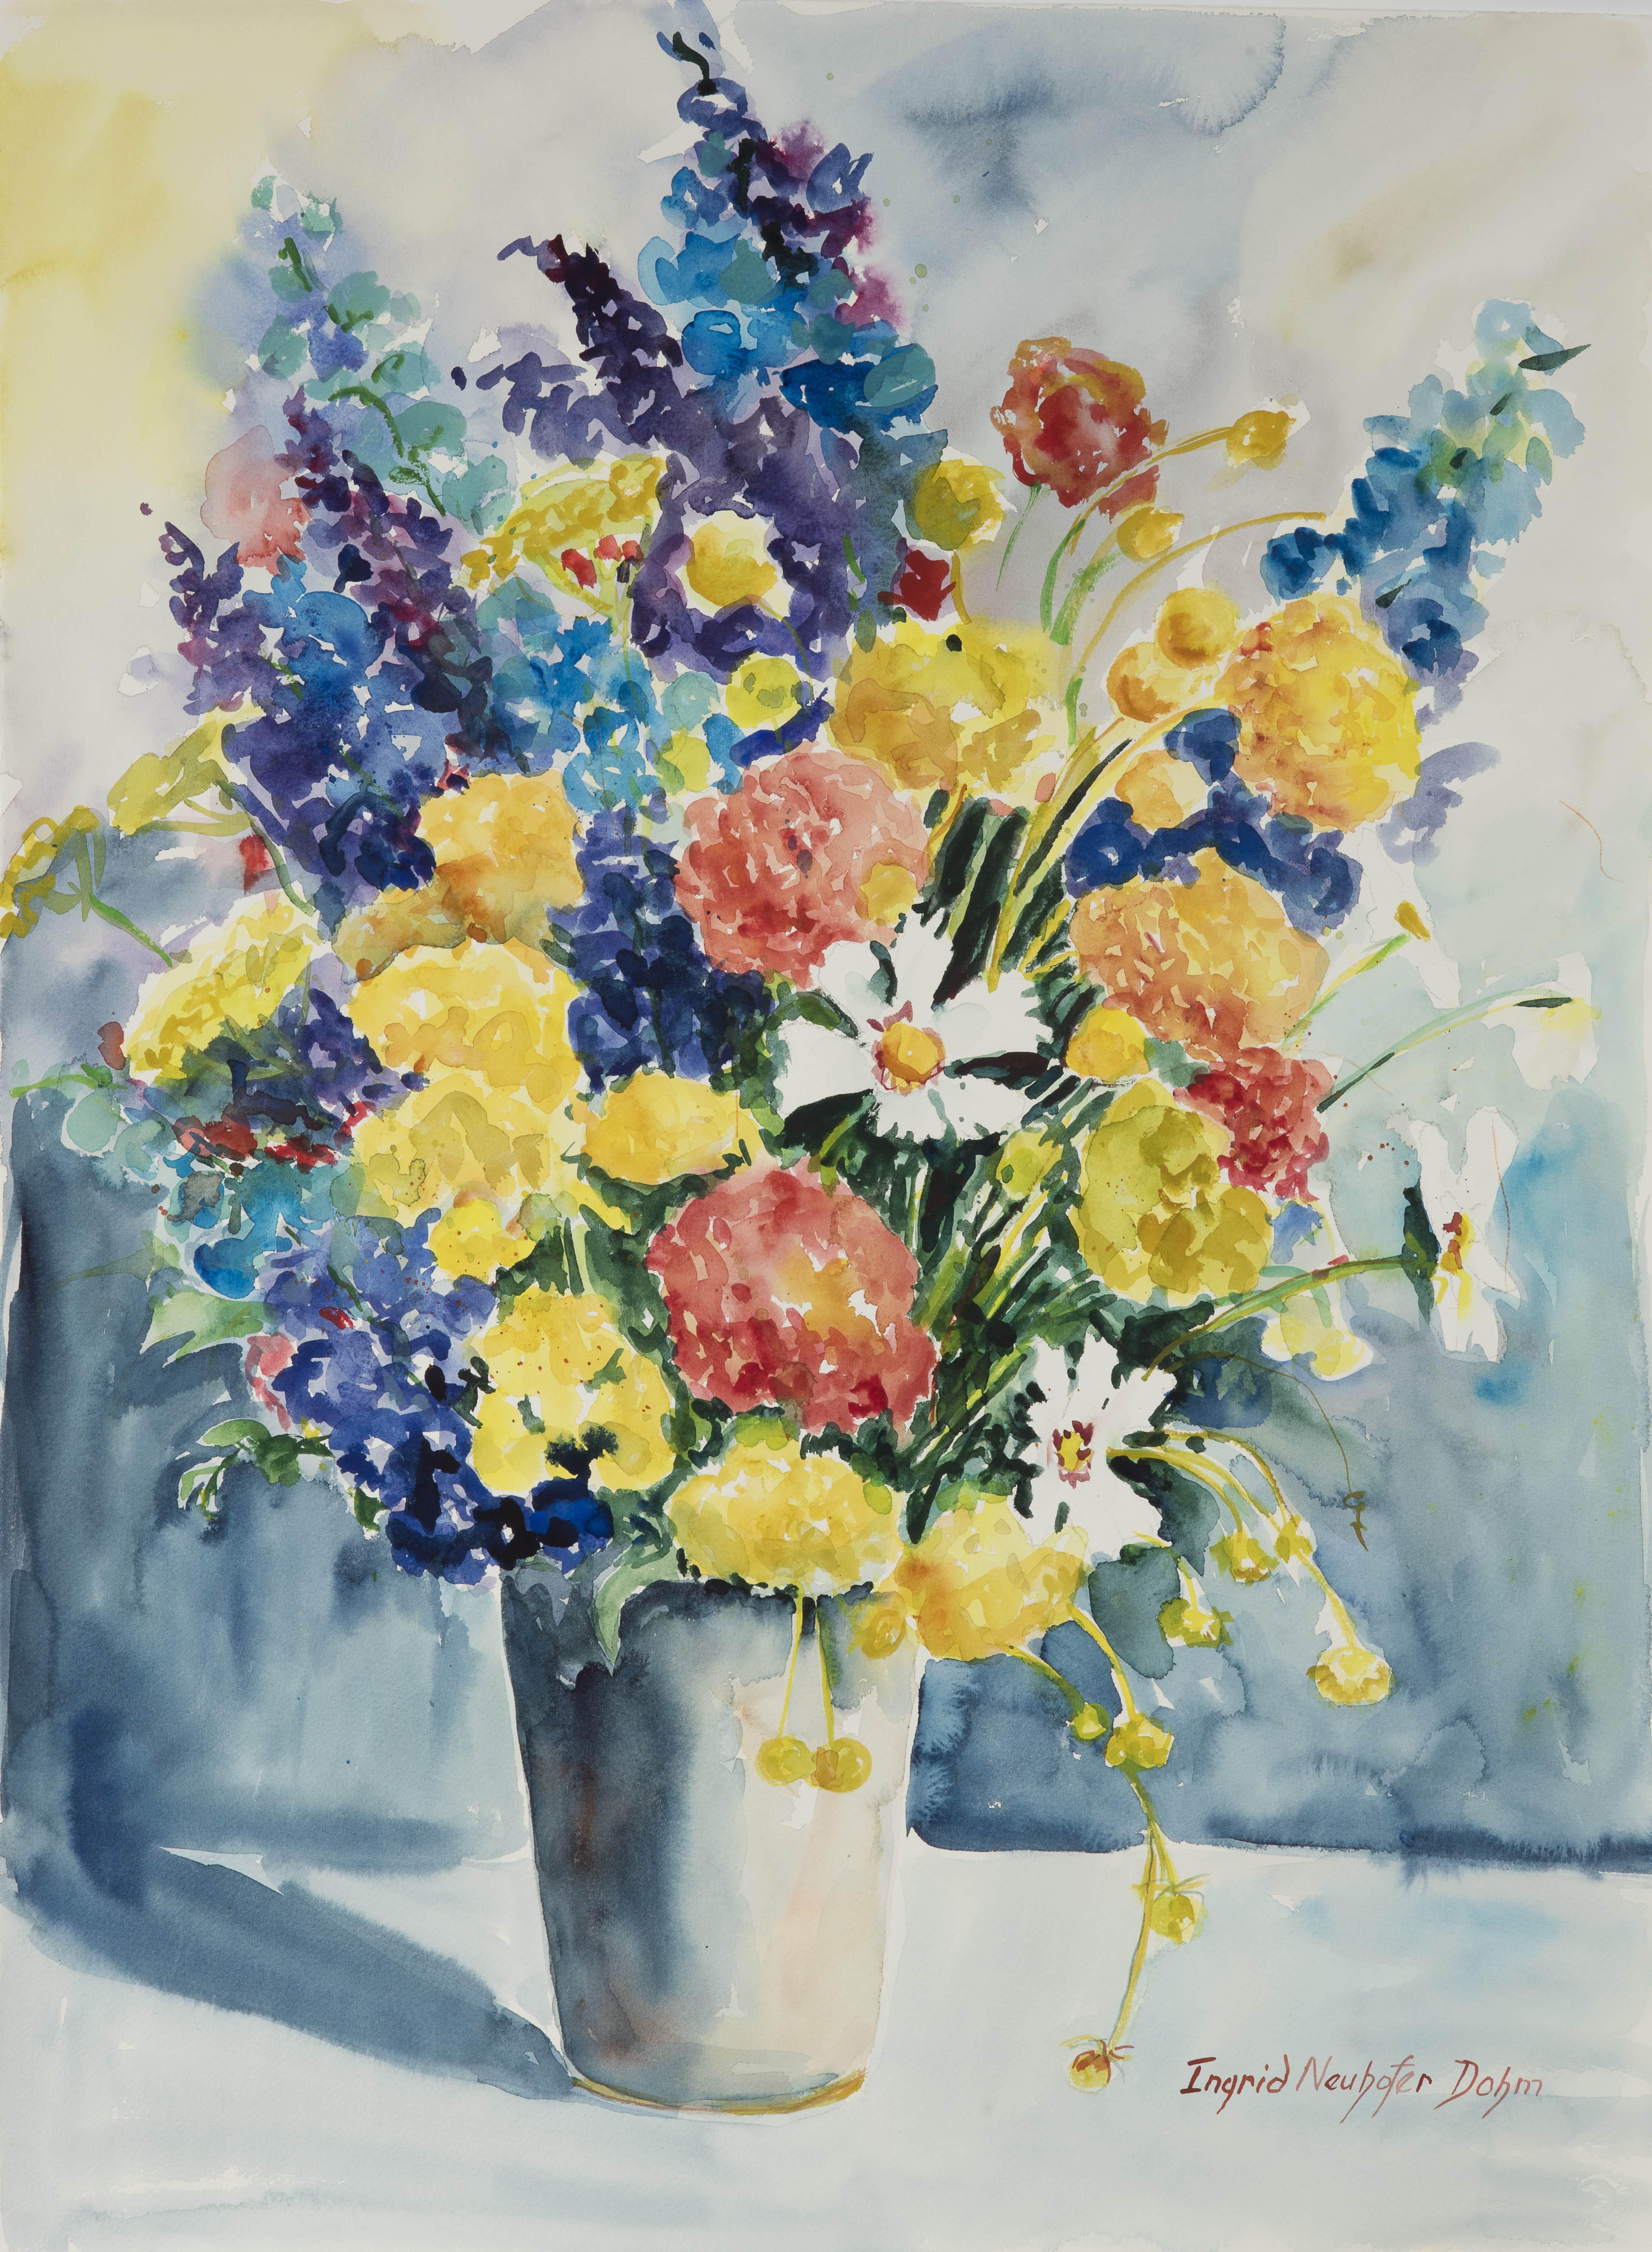 Ingrid Dohm Still-Life - Floral Arrabgement, Original Watercolor Painting, 2017